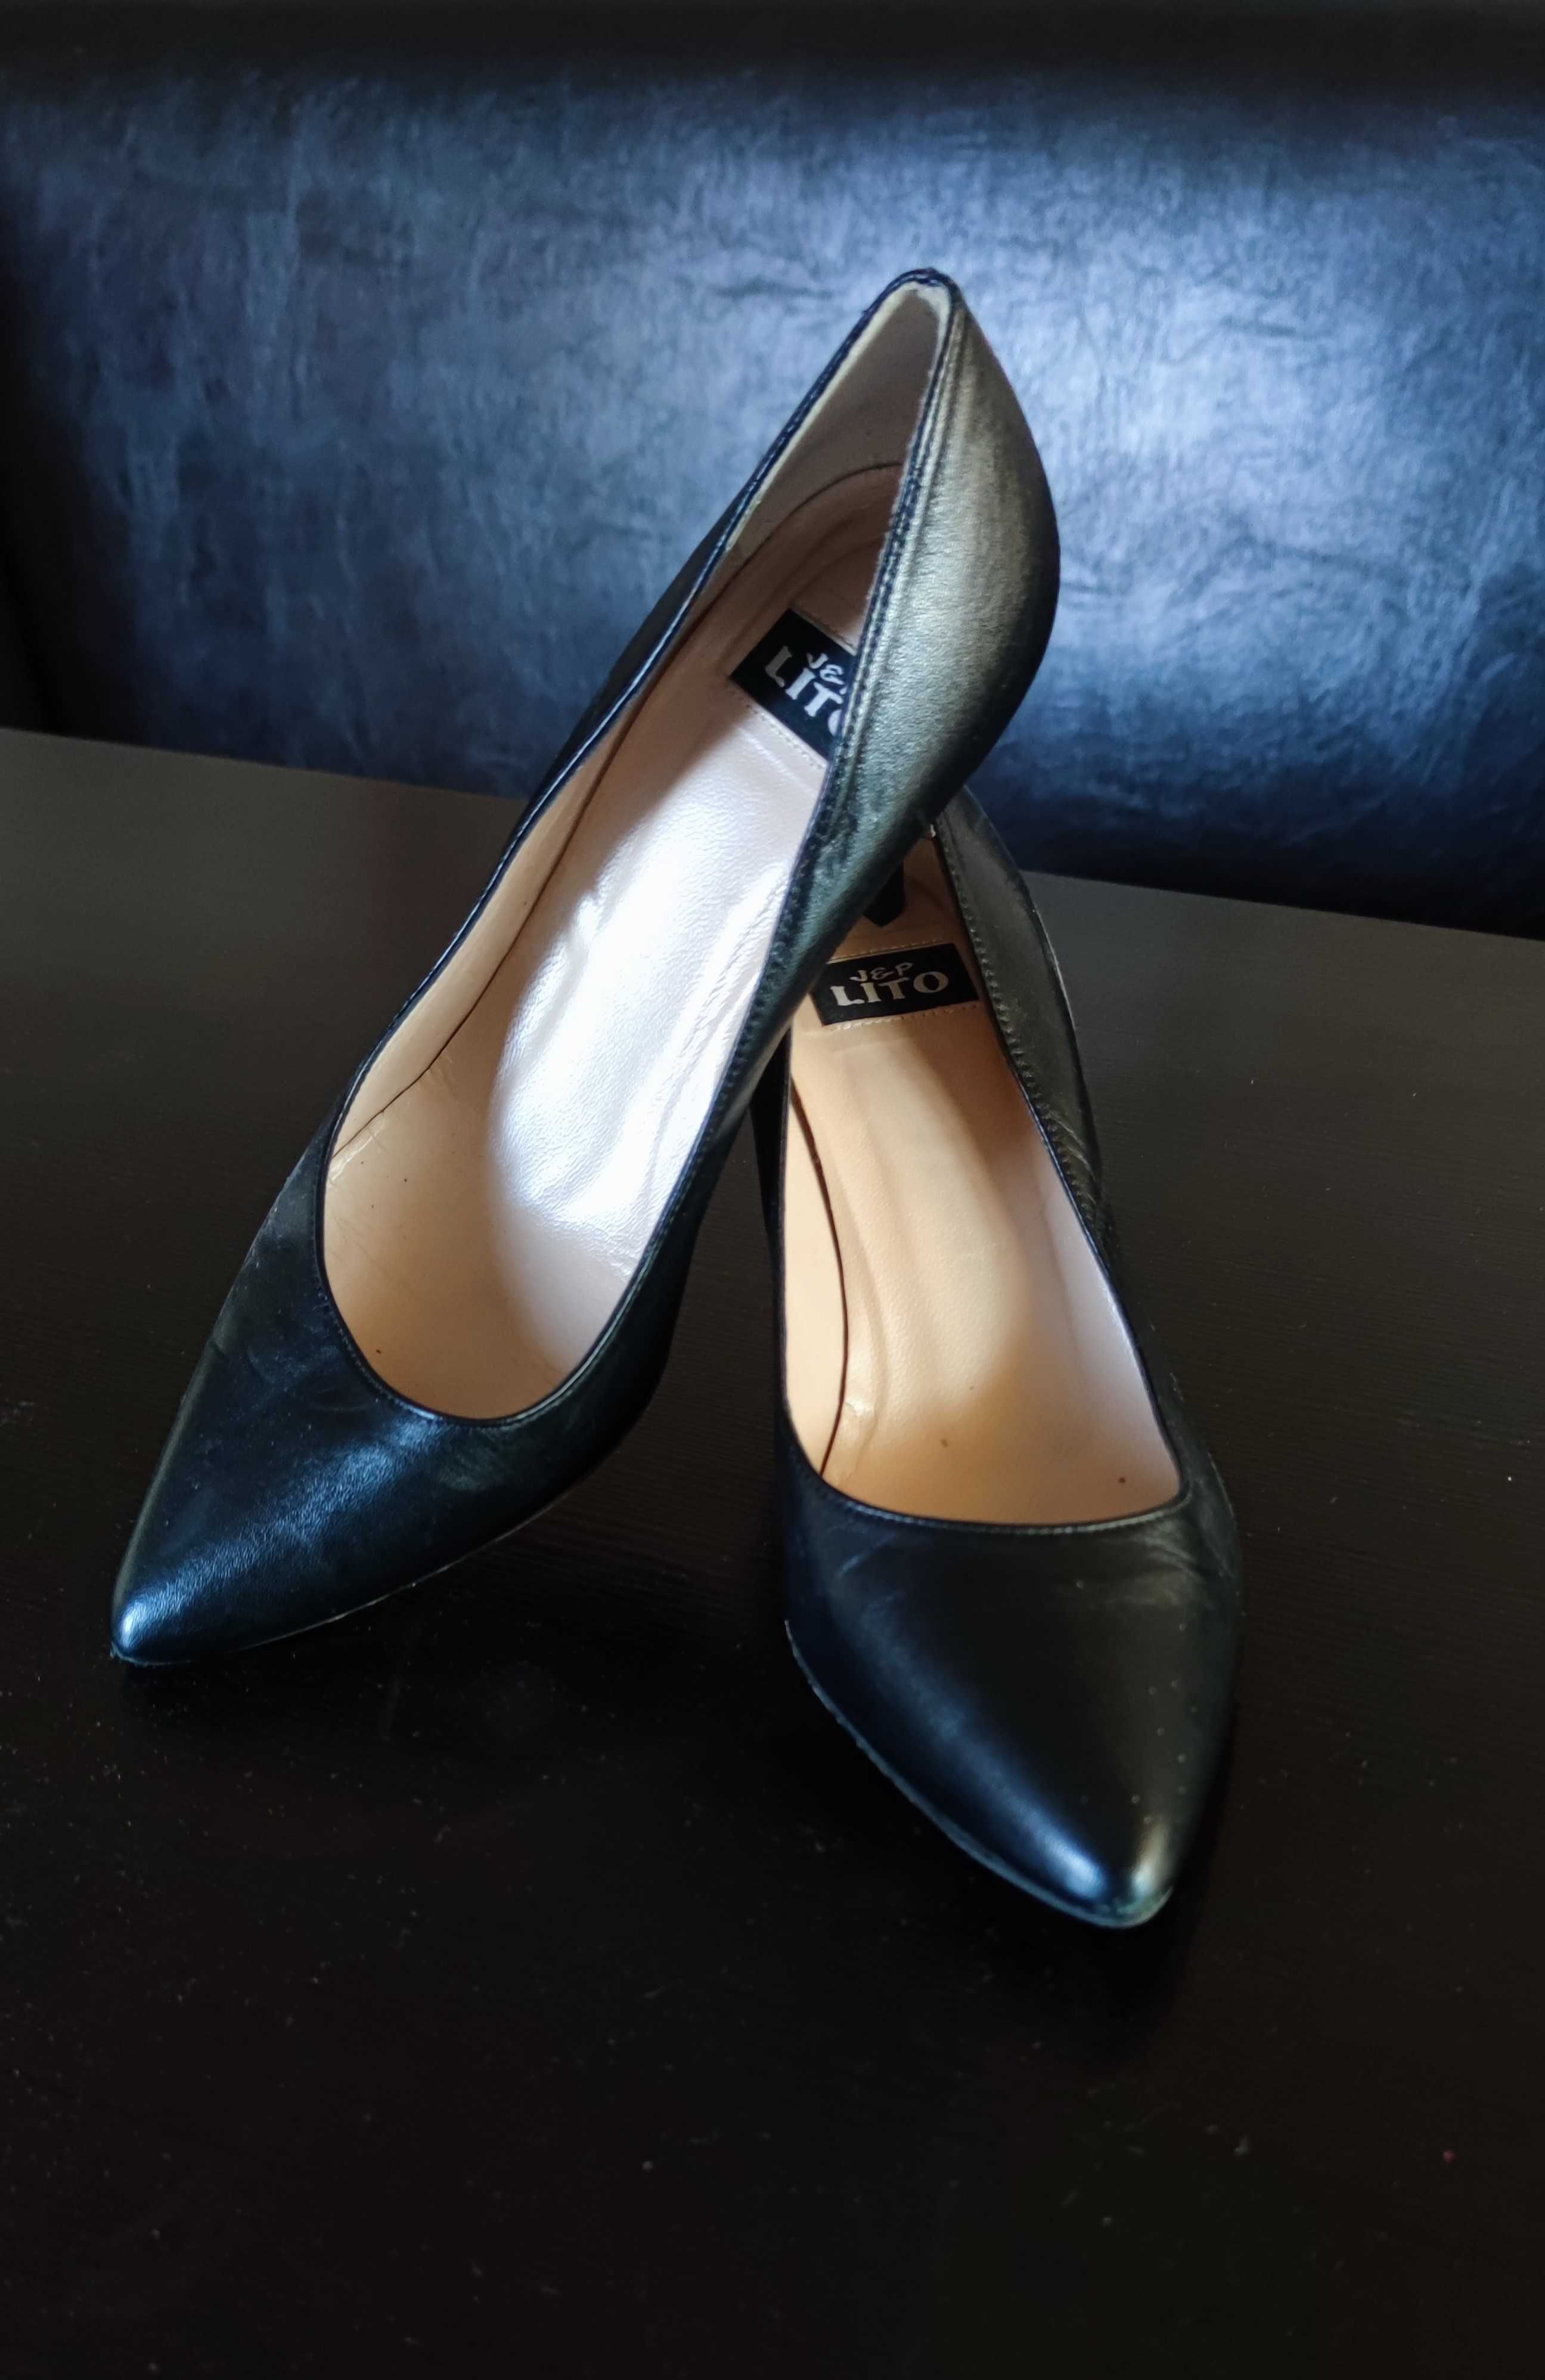 Pantofi piele stiletto mar 38 toc mediu, culoare negru